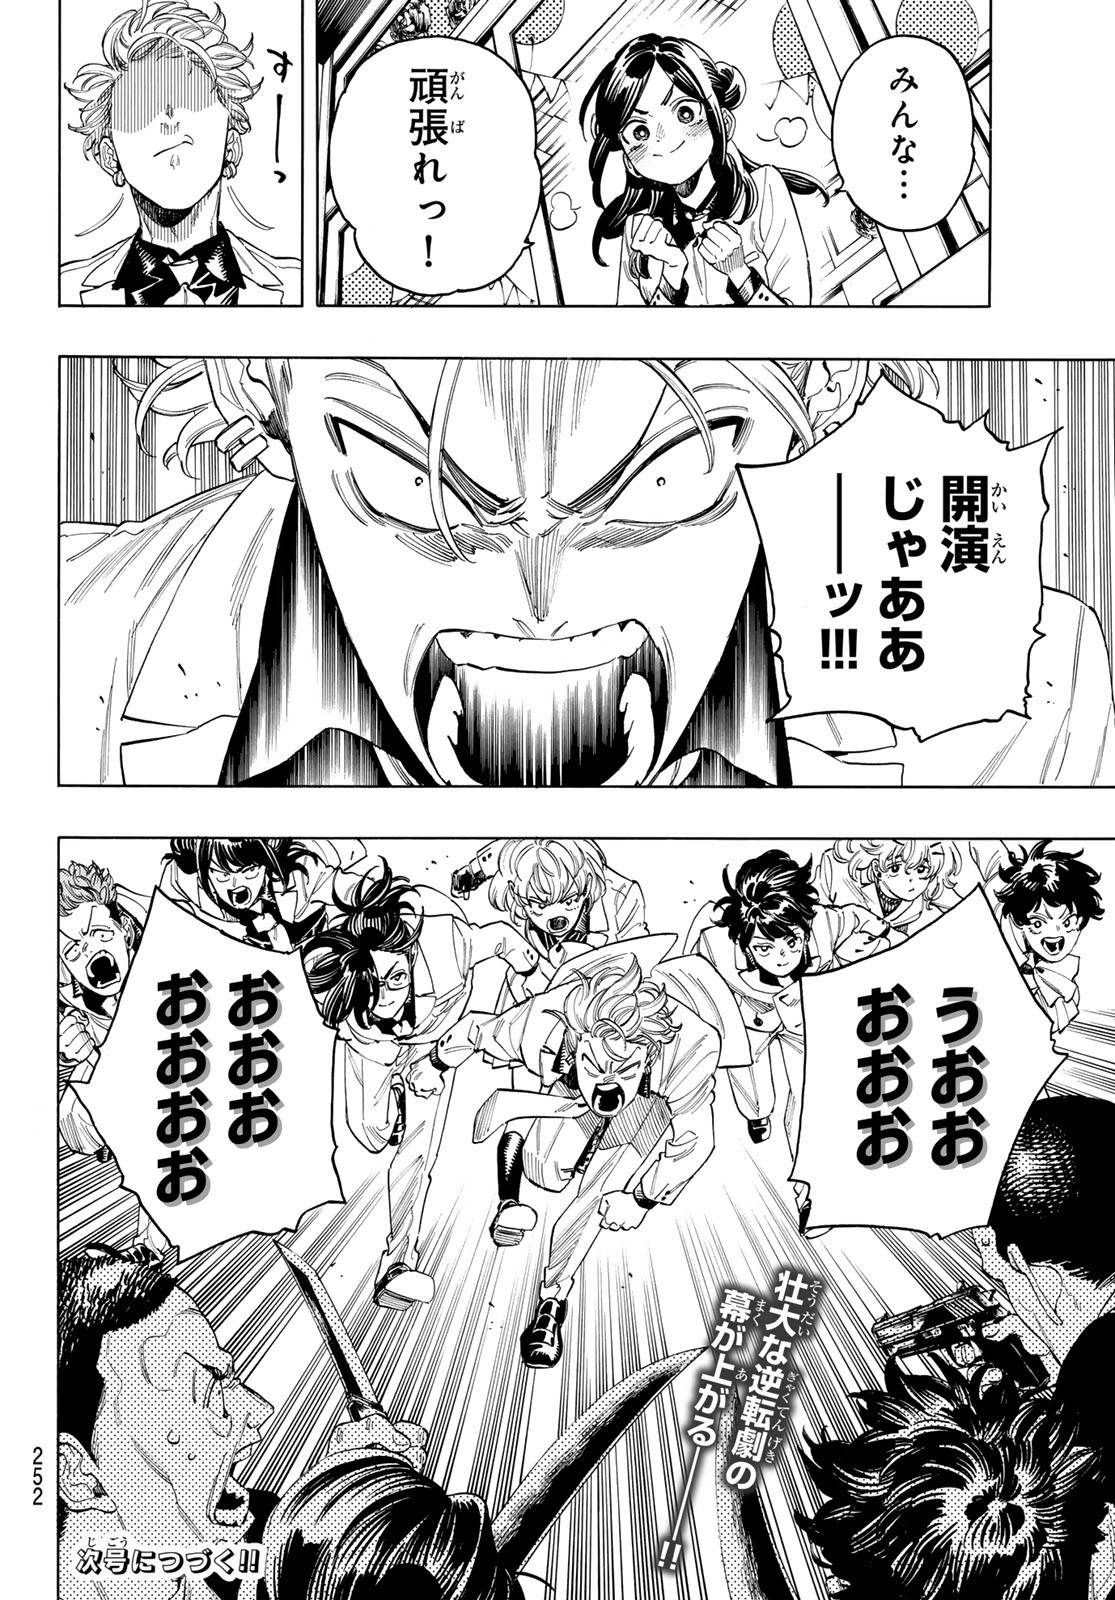 Akabane Honeko no Bodyguard - Chapter 58 - Page 20